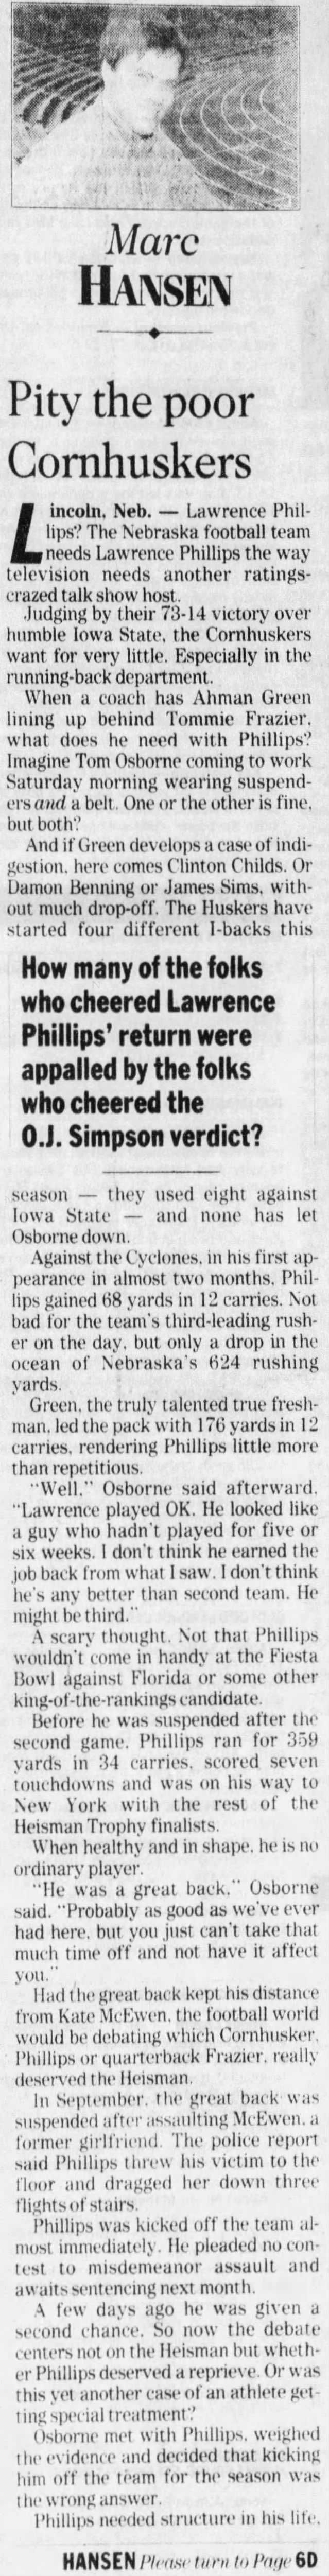 1995 Nebraska-Iowa State, Hansen column